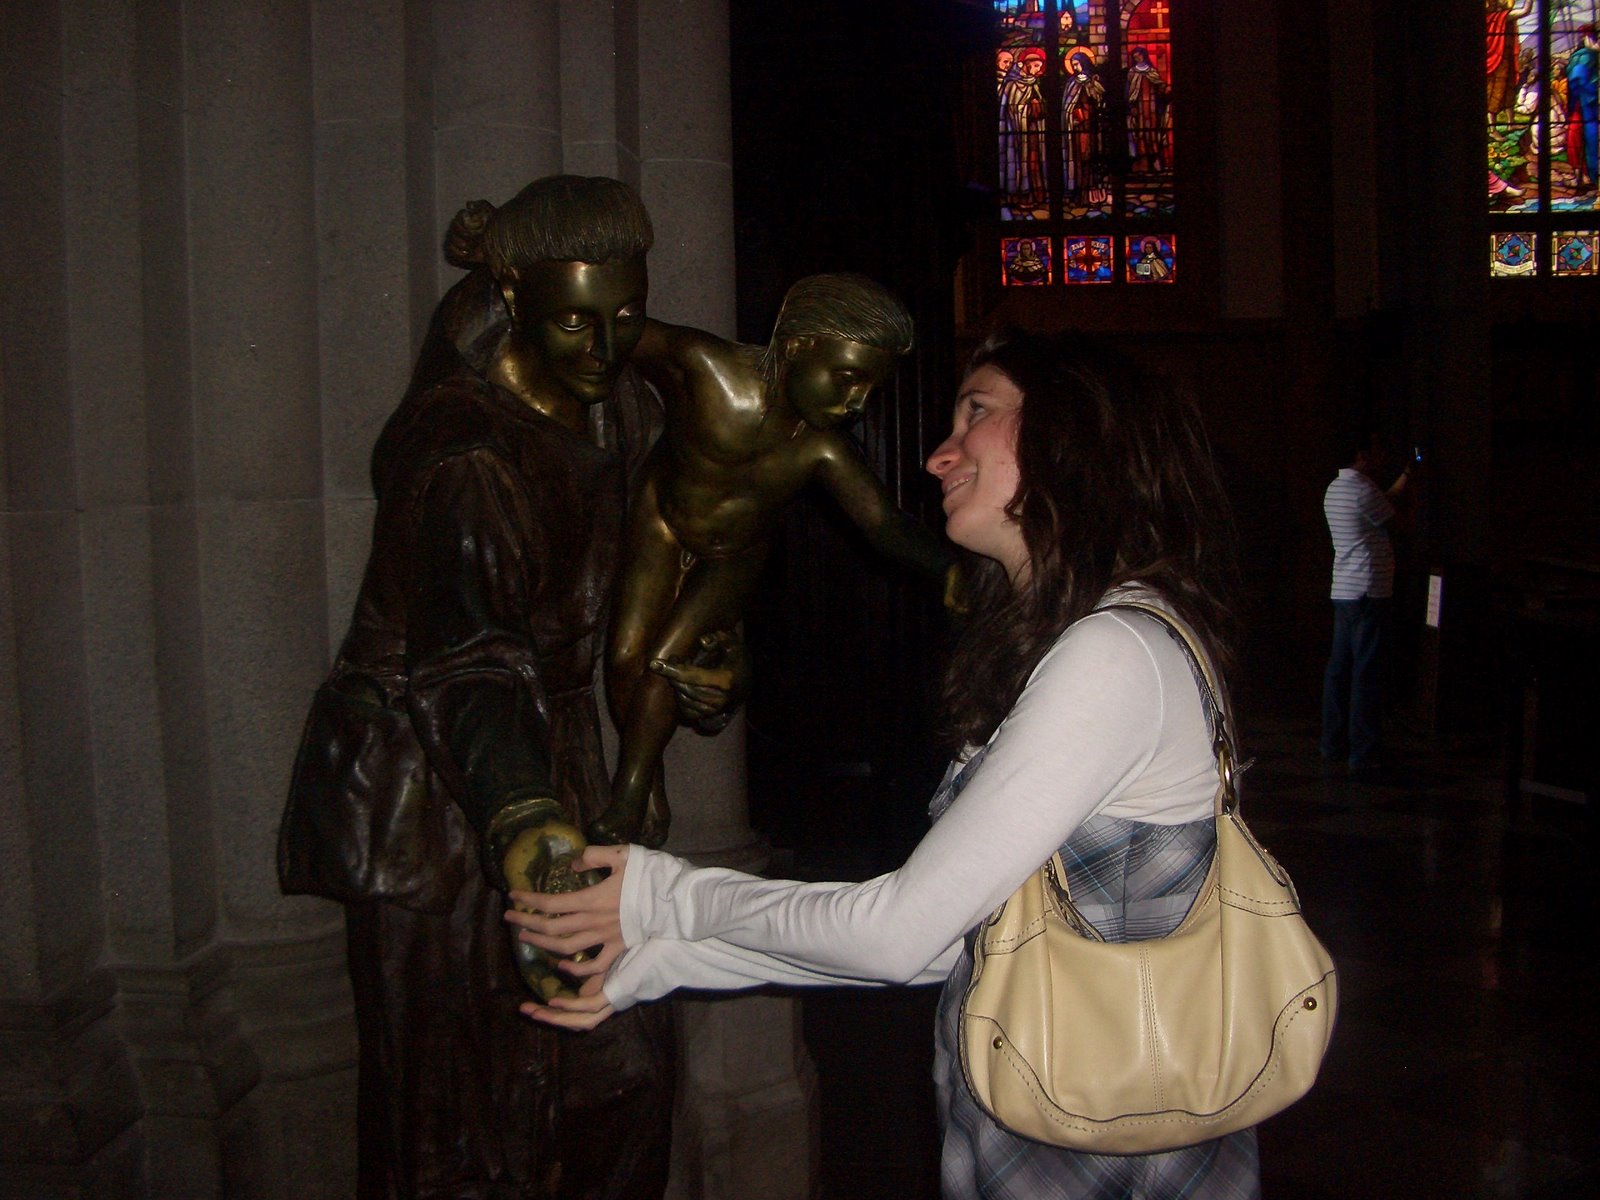 [Heidi+and+statue+in+Basilica.JPG]